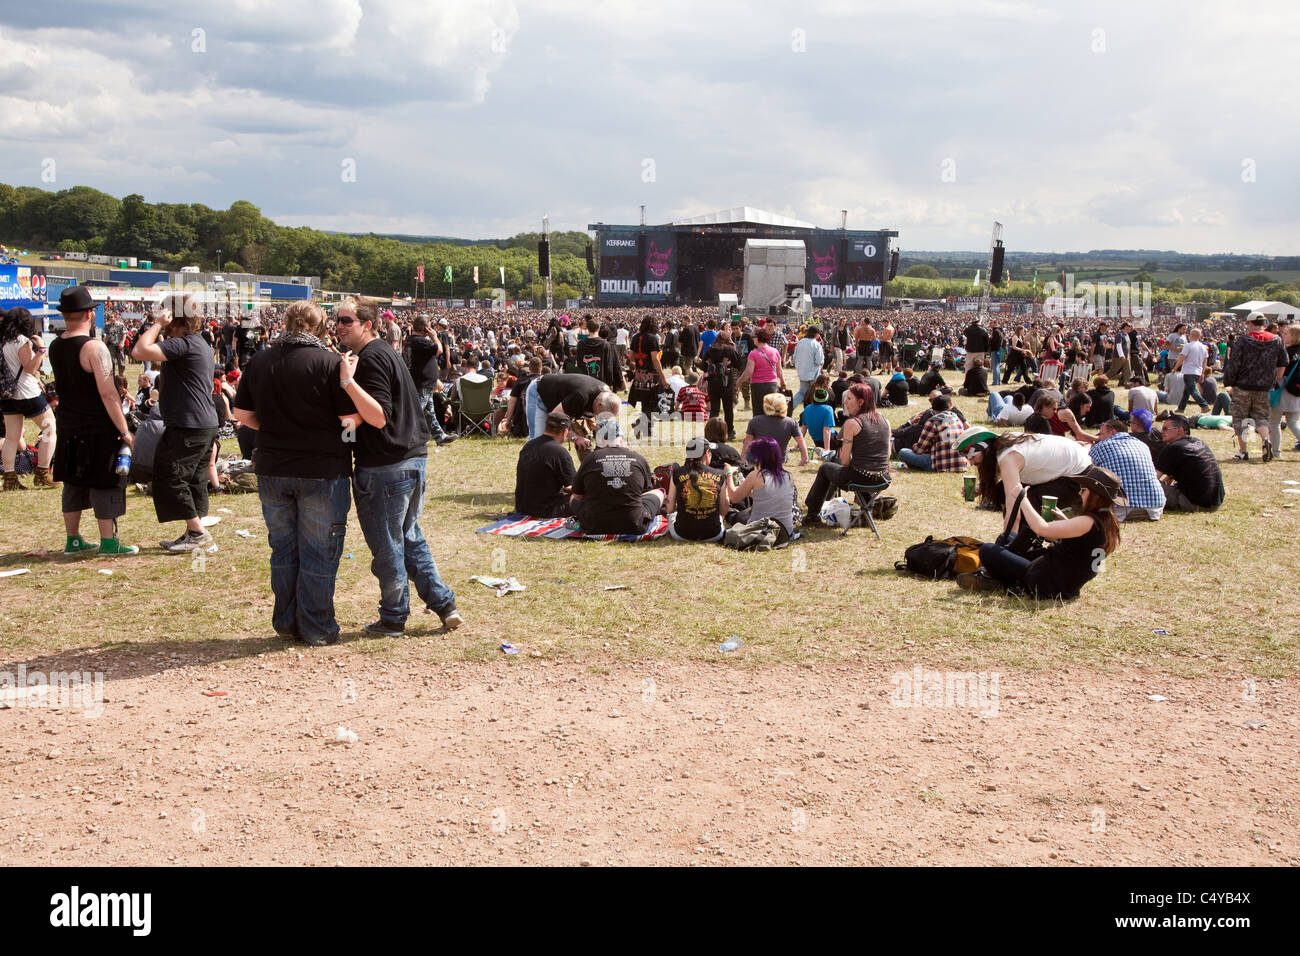 Mainstage, Download Festival 2011, Donington Park, Angleterre, Royaume-Uni. Banque D'Images